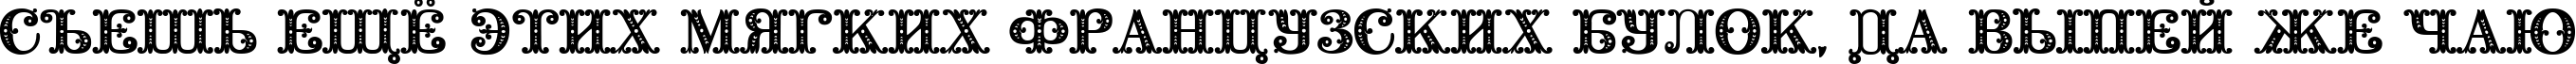 Пример написания шрифтом Barocco Initial текста на русском